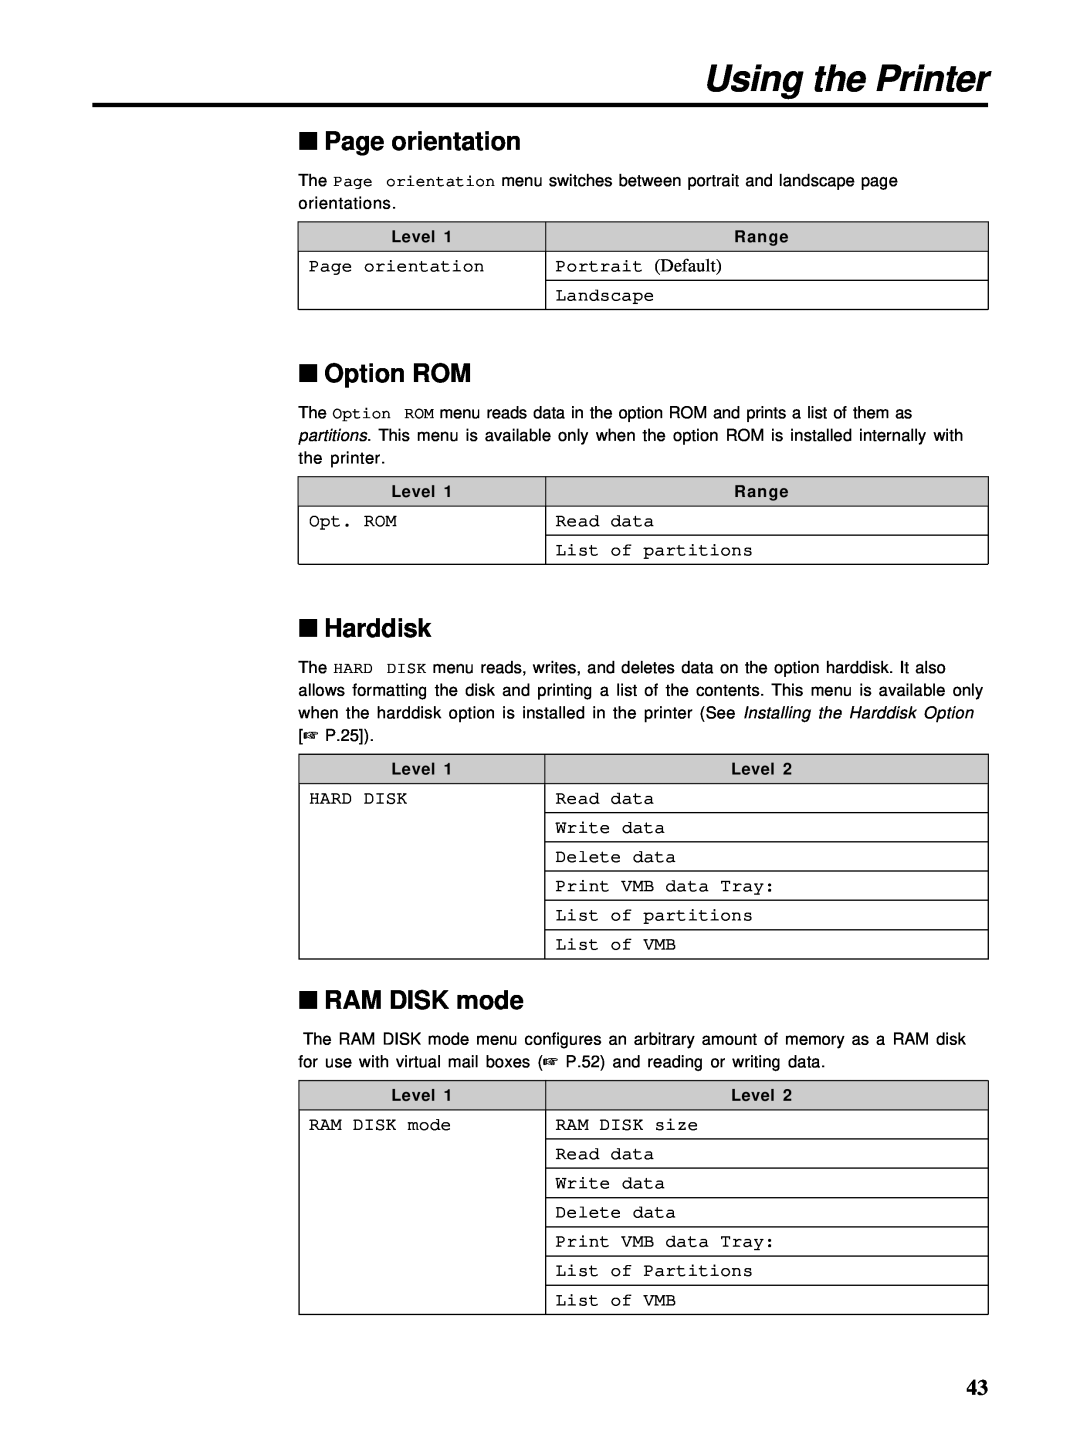 HP Ci 1100 manual Page orientation, Option ROM, Harddisk, RAM DISK mode, Using the Printer 